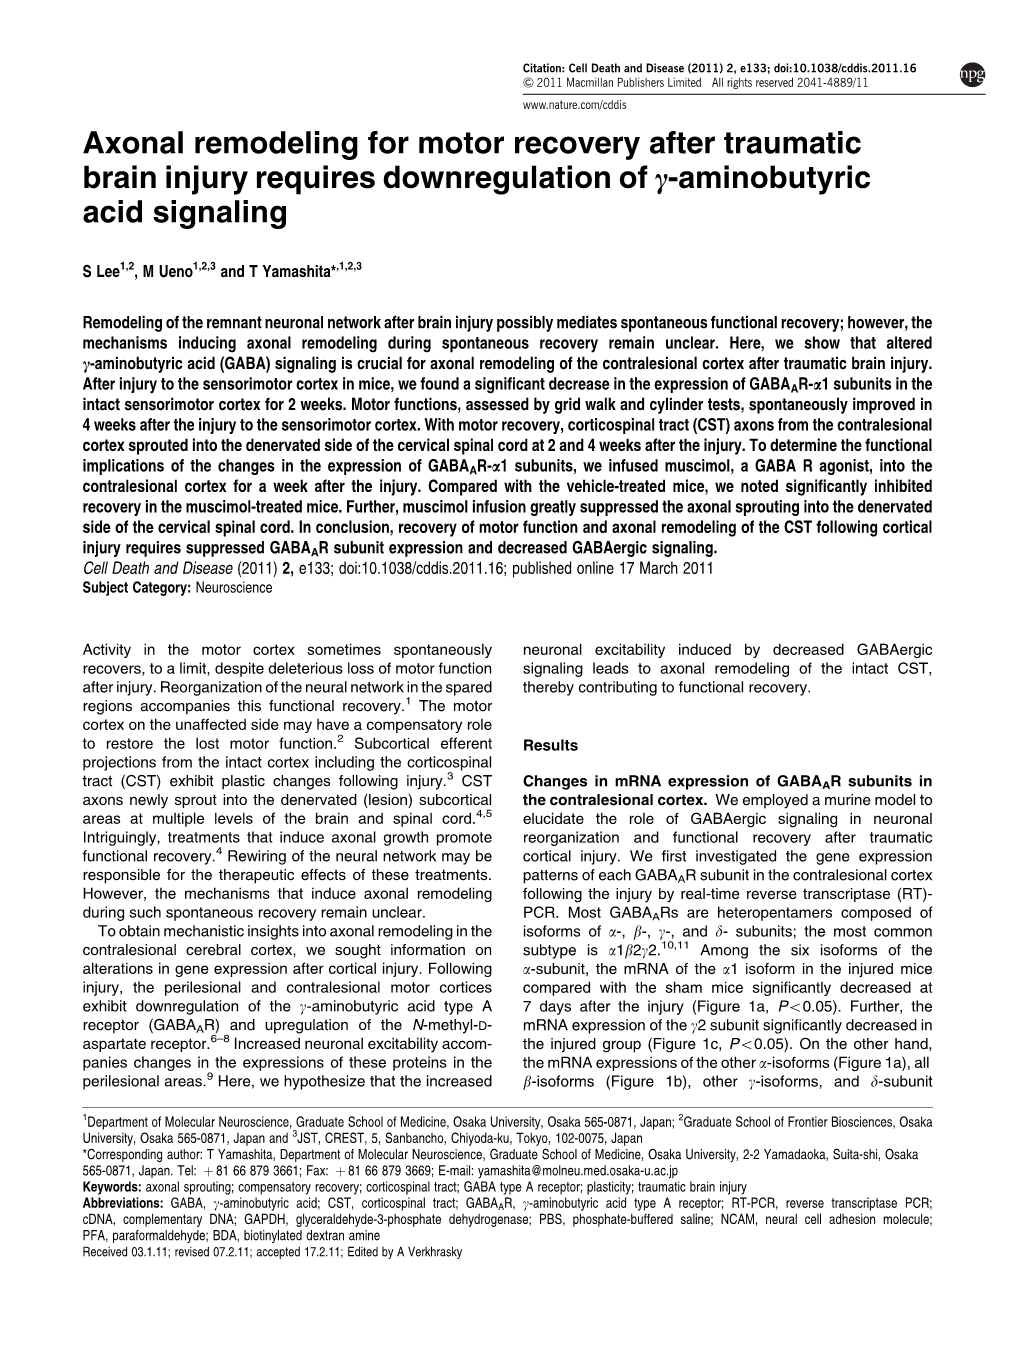 Aminobutyric Acid Signaling